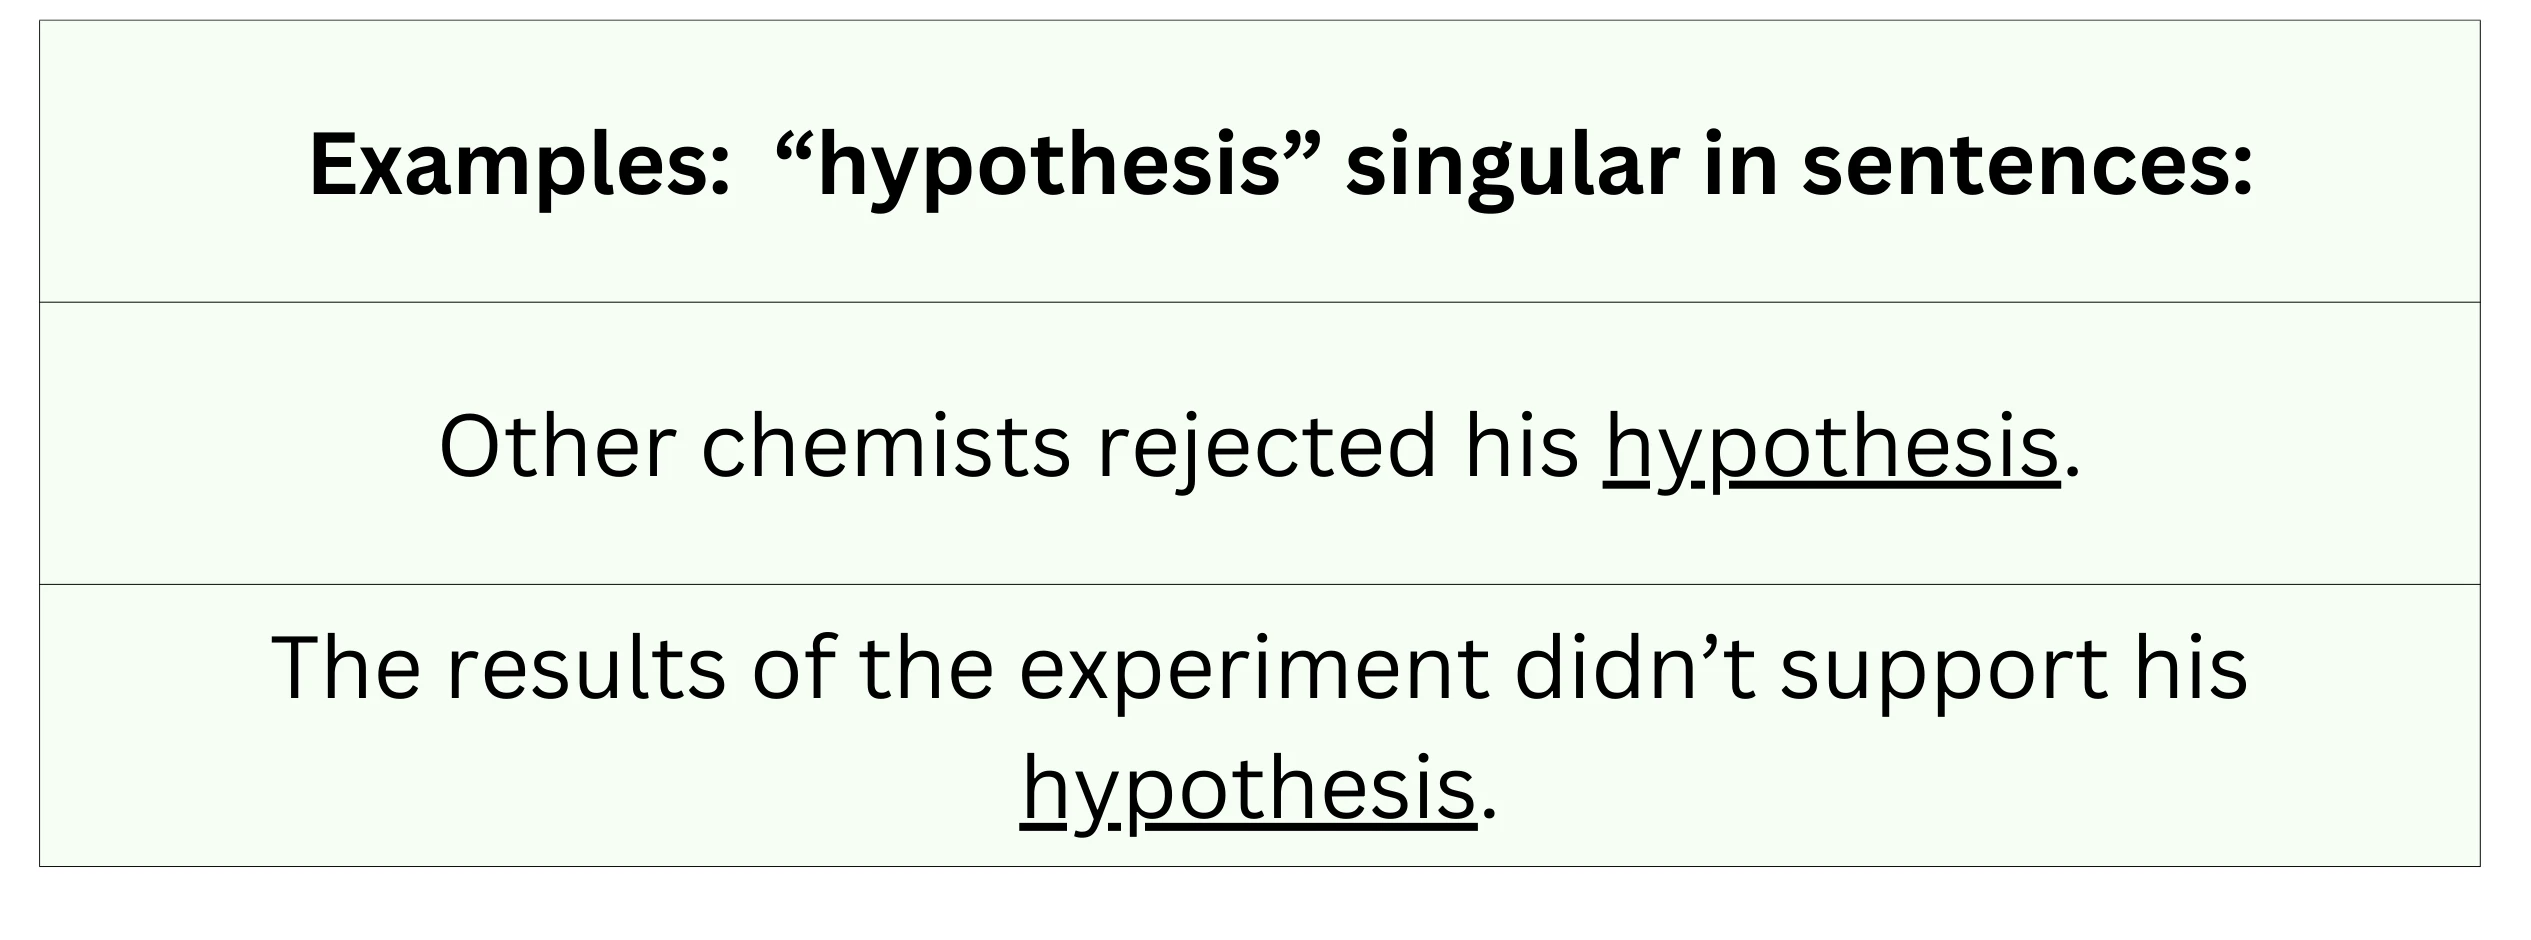 hypothesis a plural